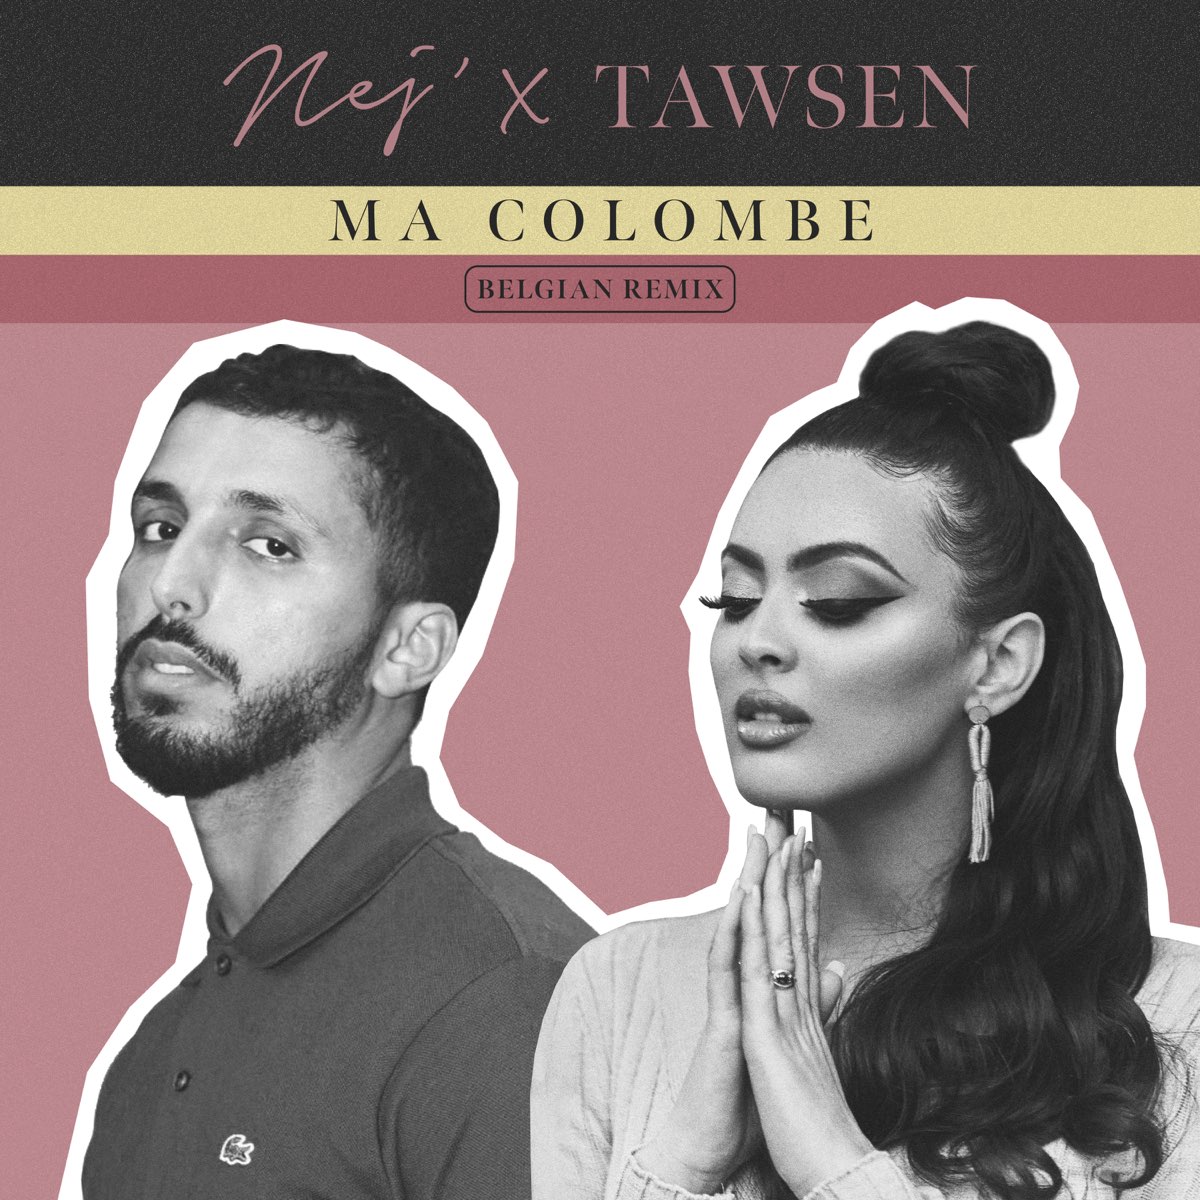 Ma colombe (Belgian Remix) - Single - Album by Nej & Tawsen - Apple Music